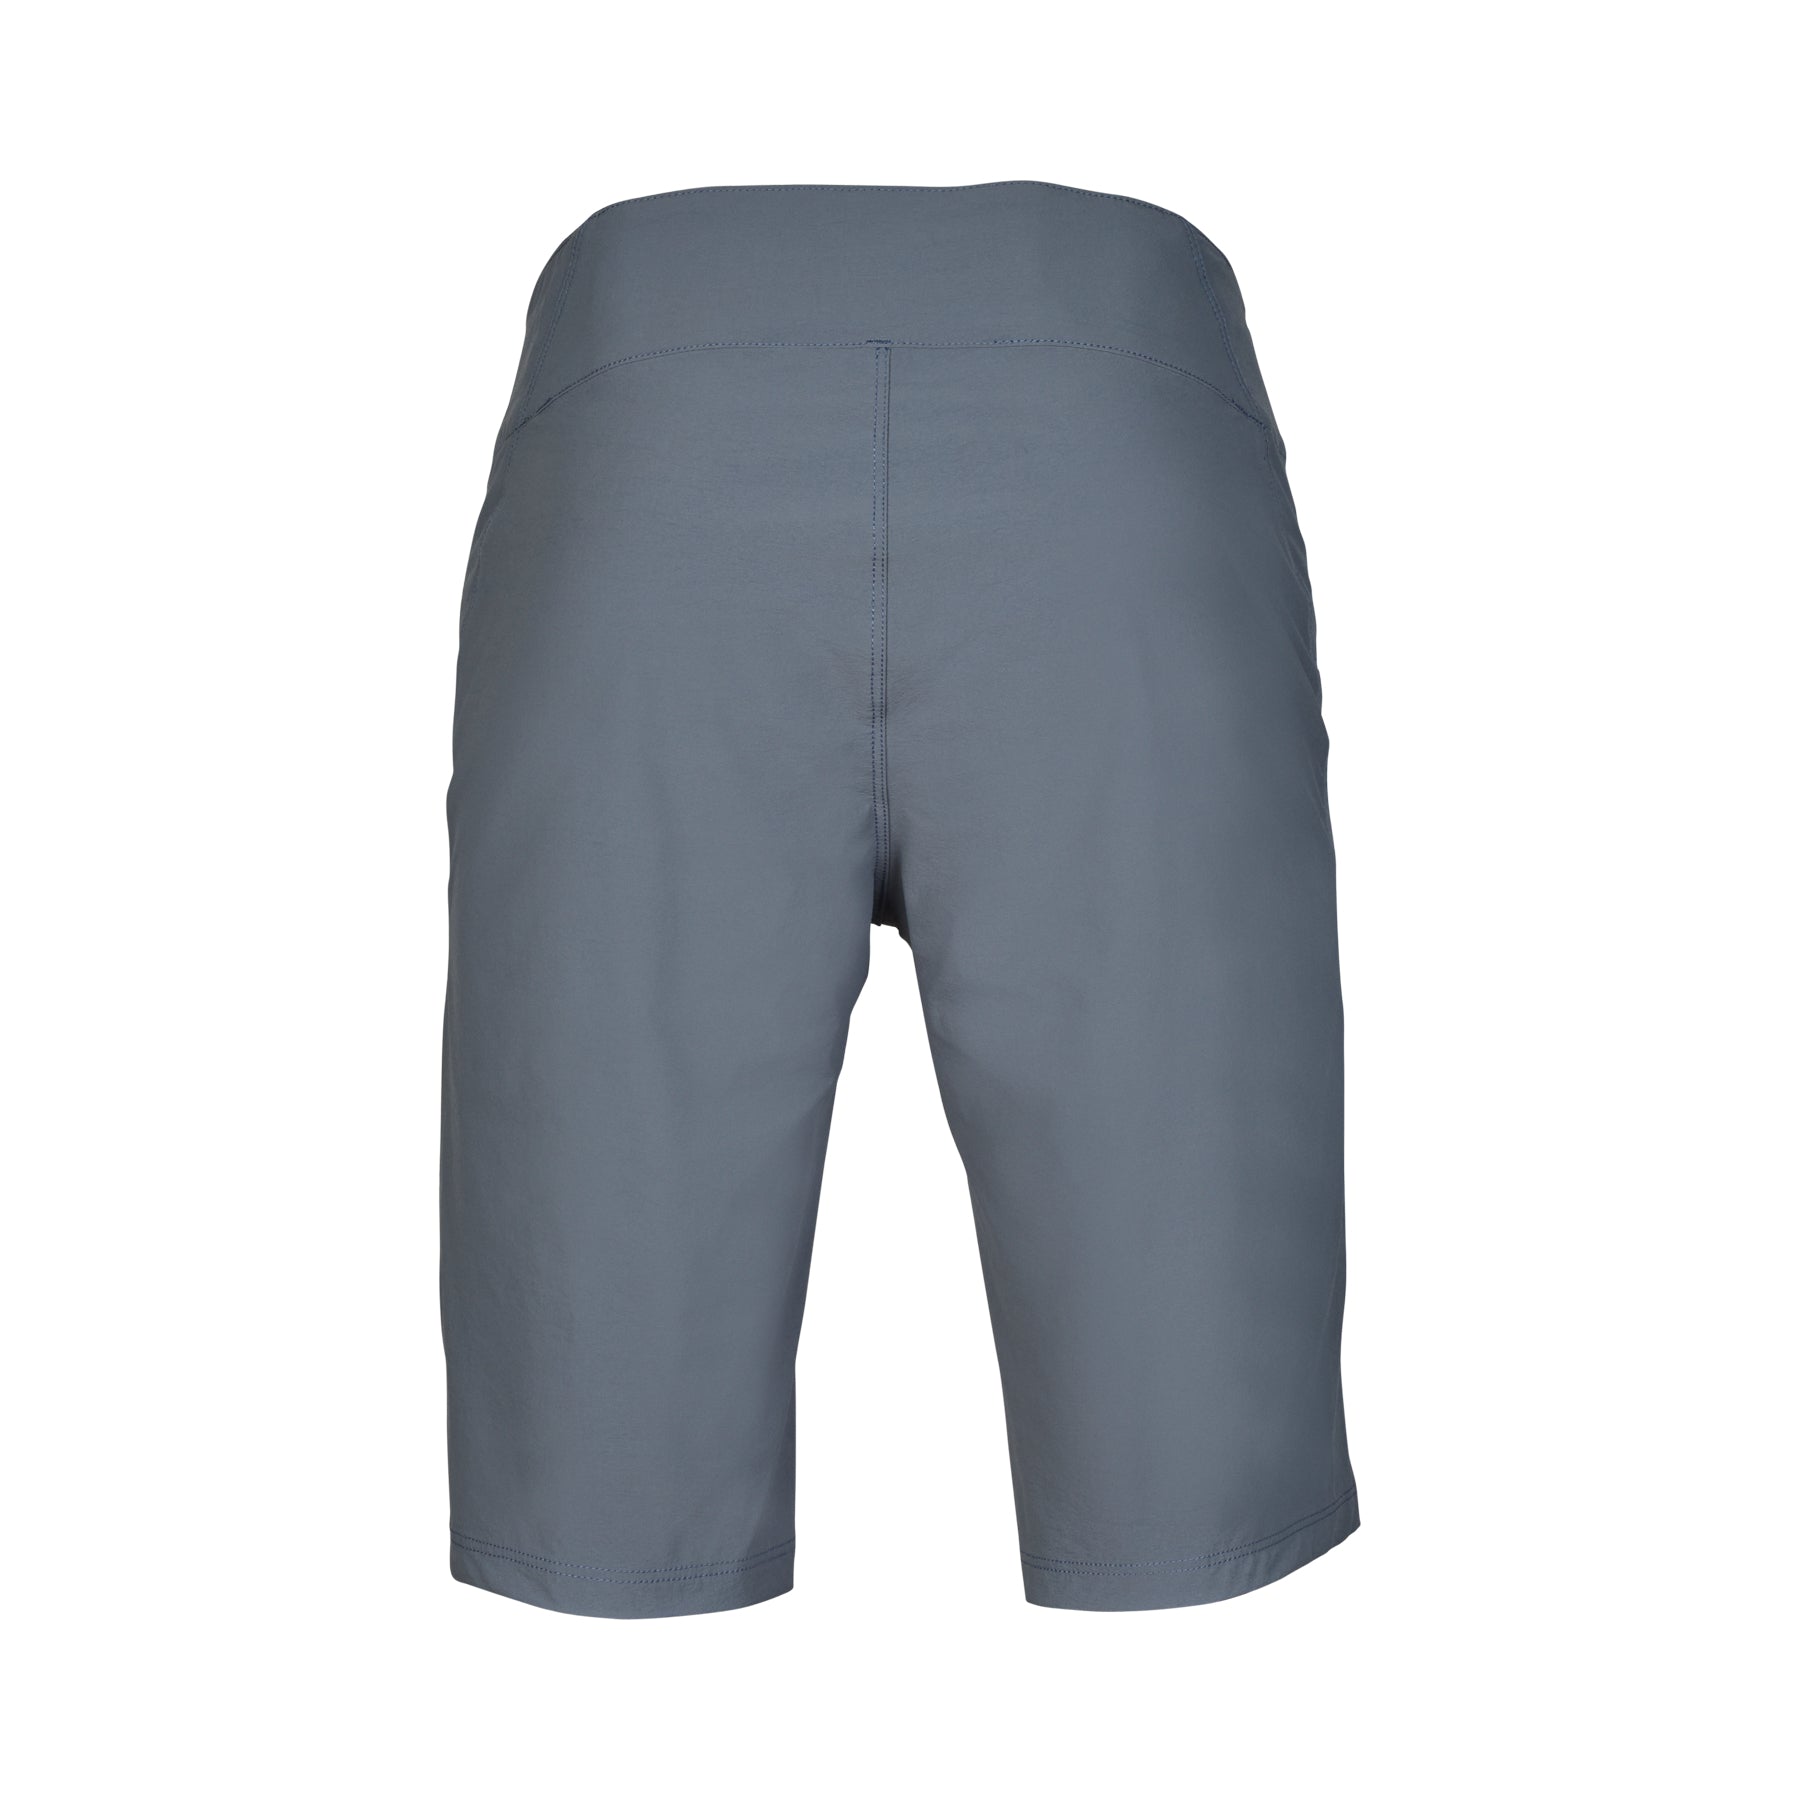 Fox Flexair Shorts With Liner - L-34 - Graphite - Image 2